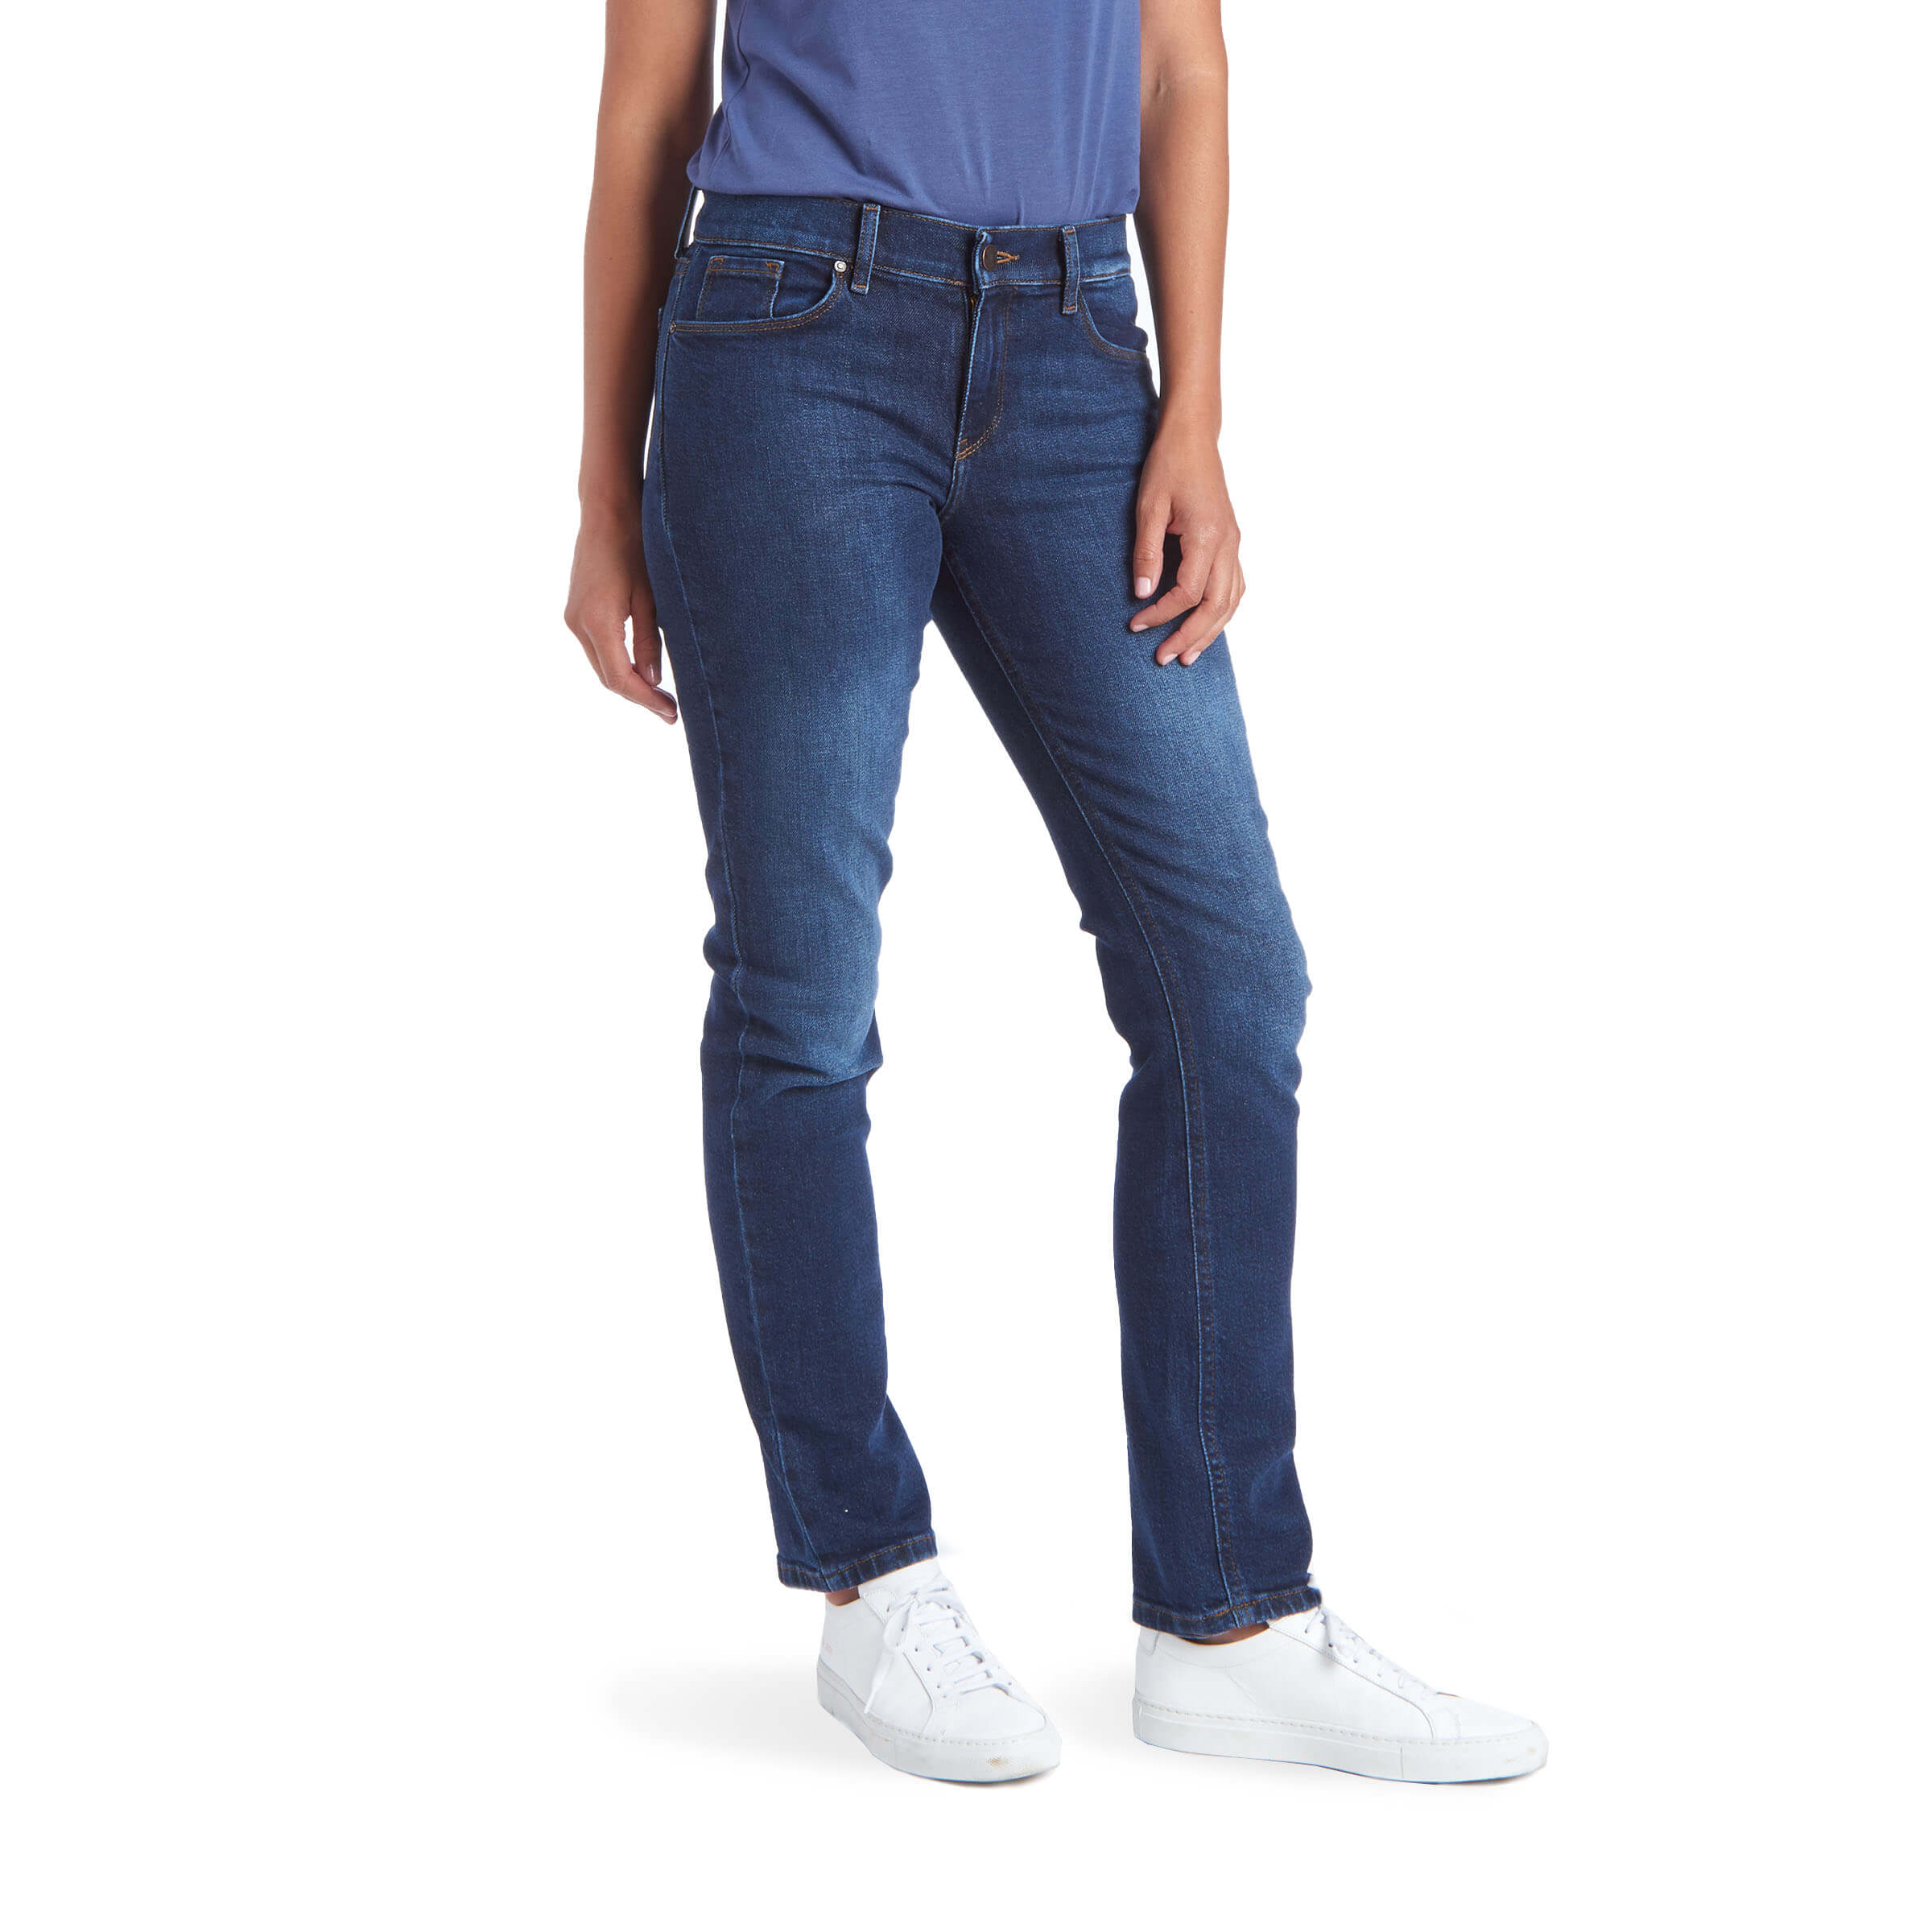 Women wearing Azul oscuro/medio Slim Boyfriend Grand Jeans